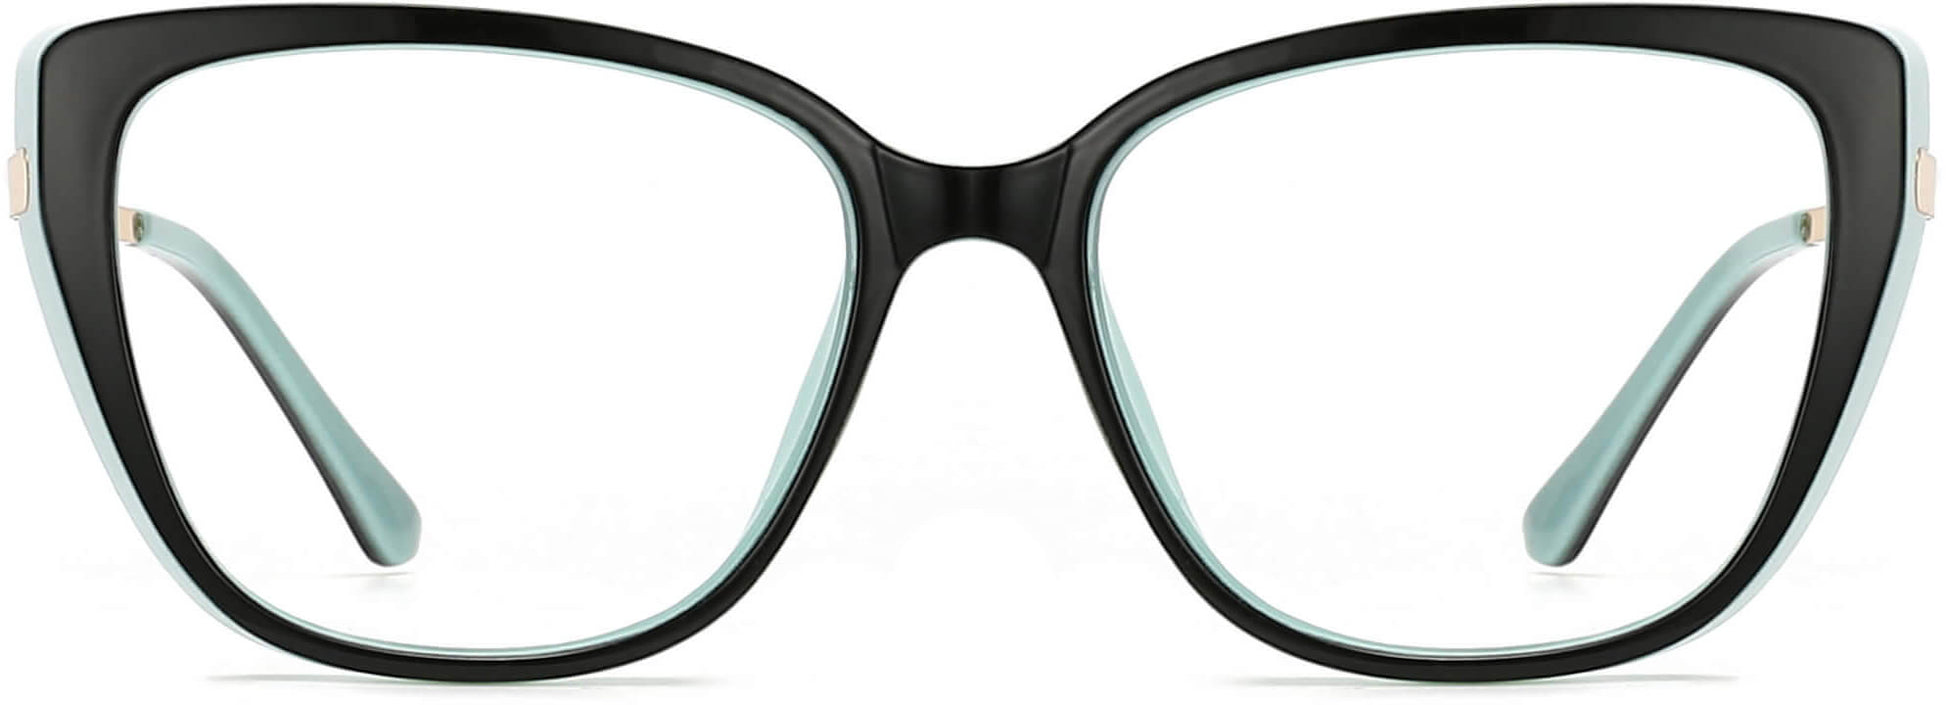 Elianna Cateye Black Eyeglasses from ANRRI, front view